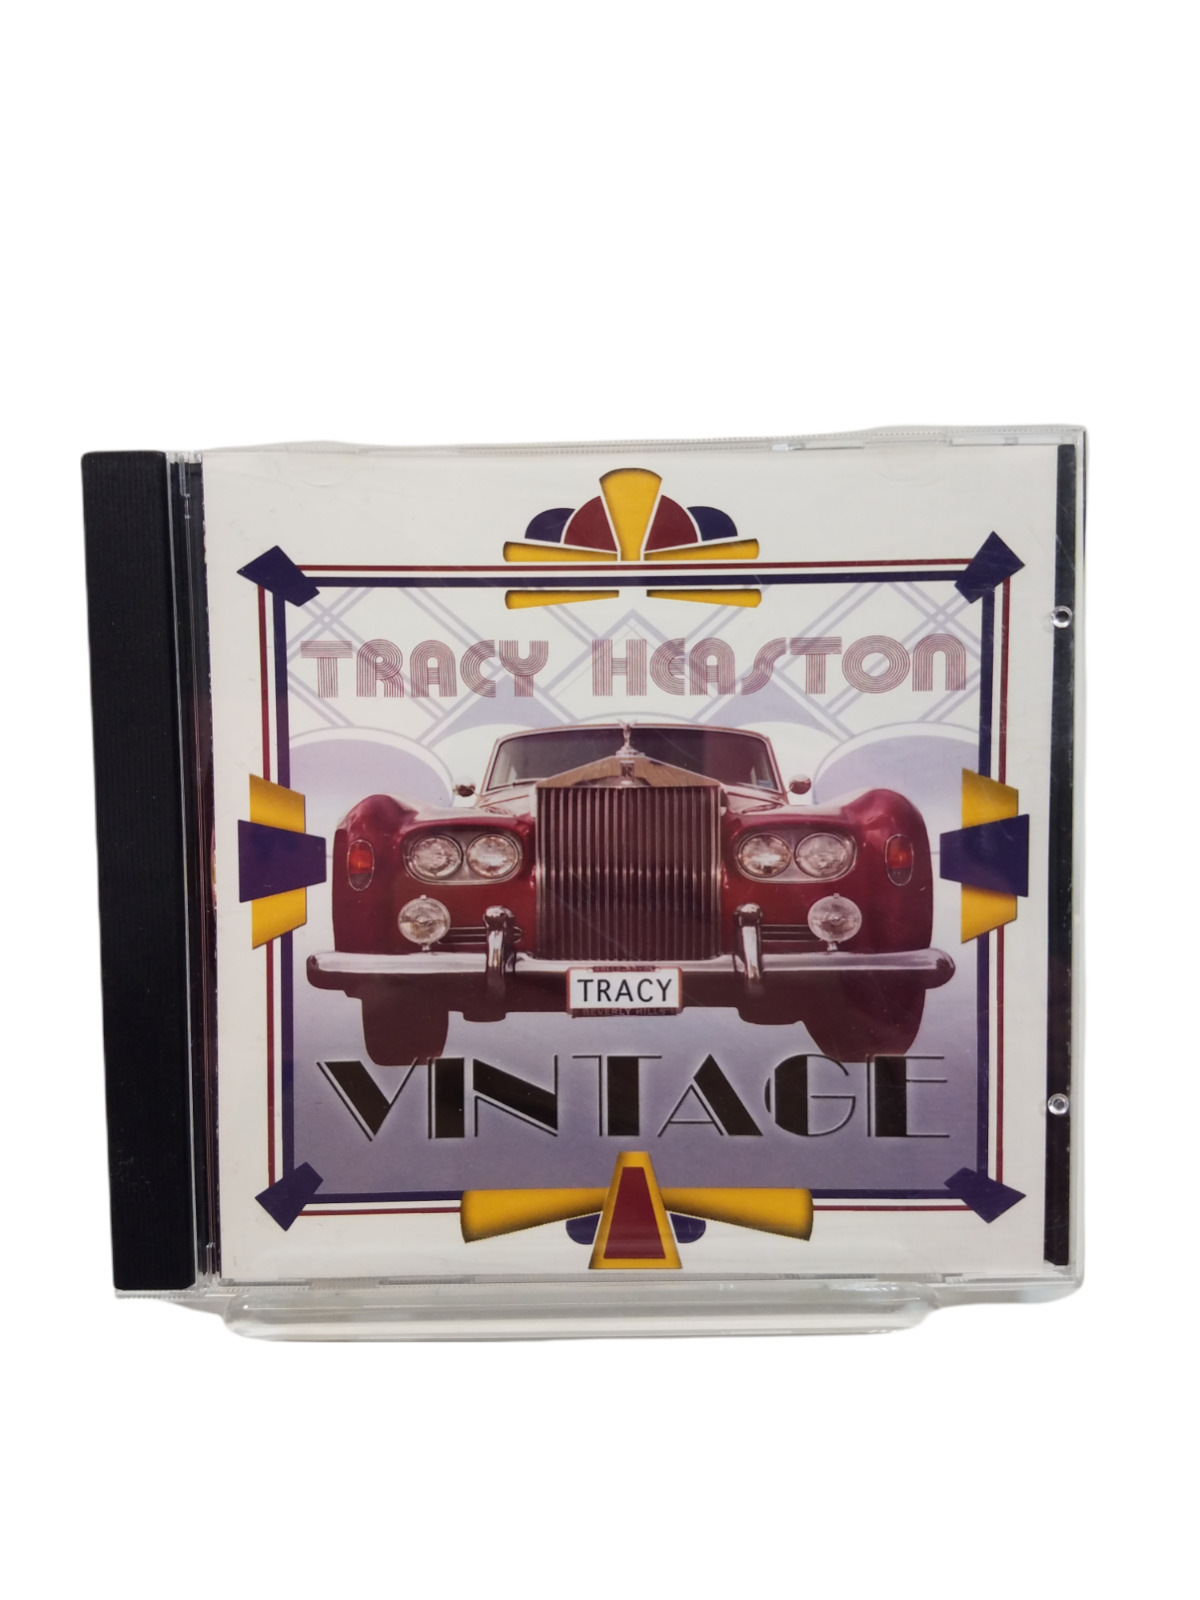 Tracy Heaston - Vintage (CD, 2002) Branson MO